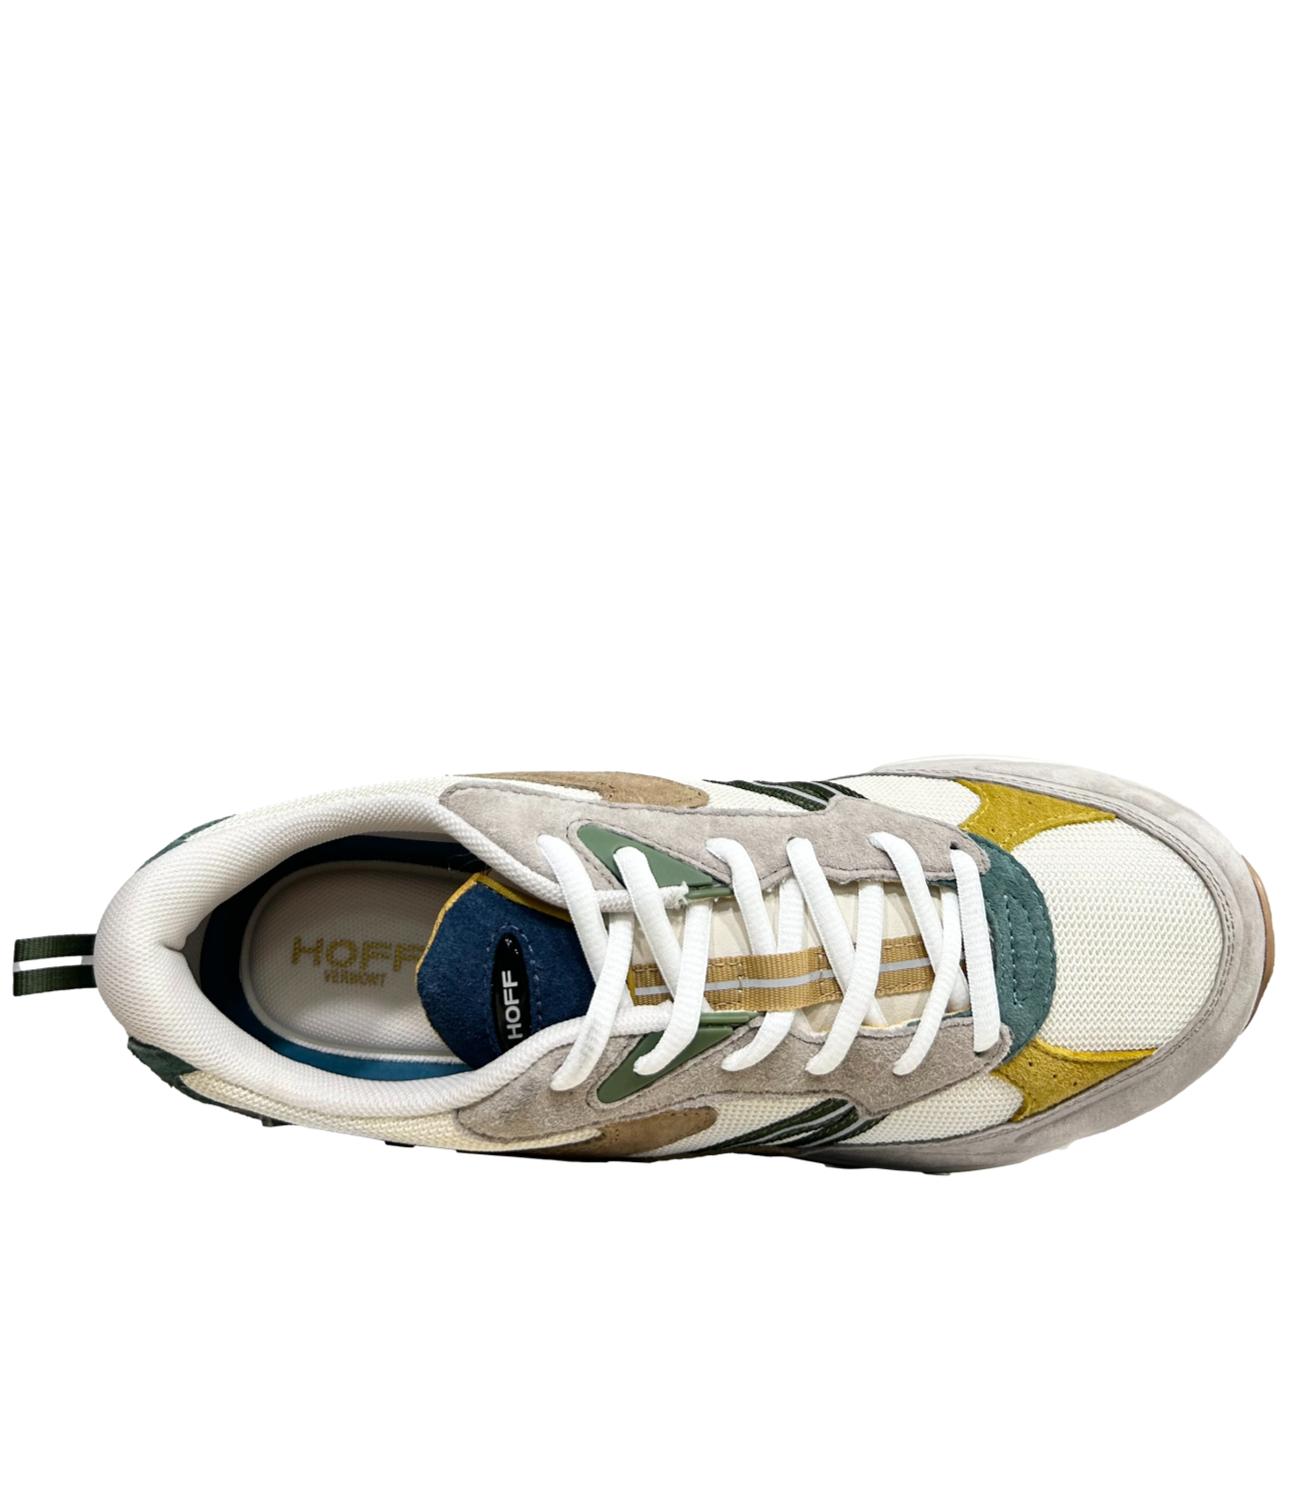 HOFF Sneakers bianco/beige/grigio VERMONT uomo